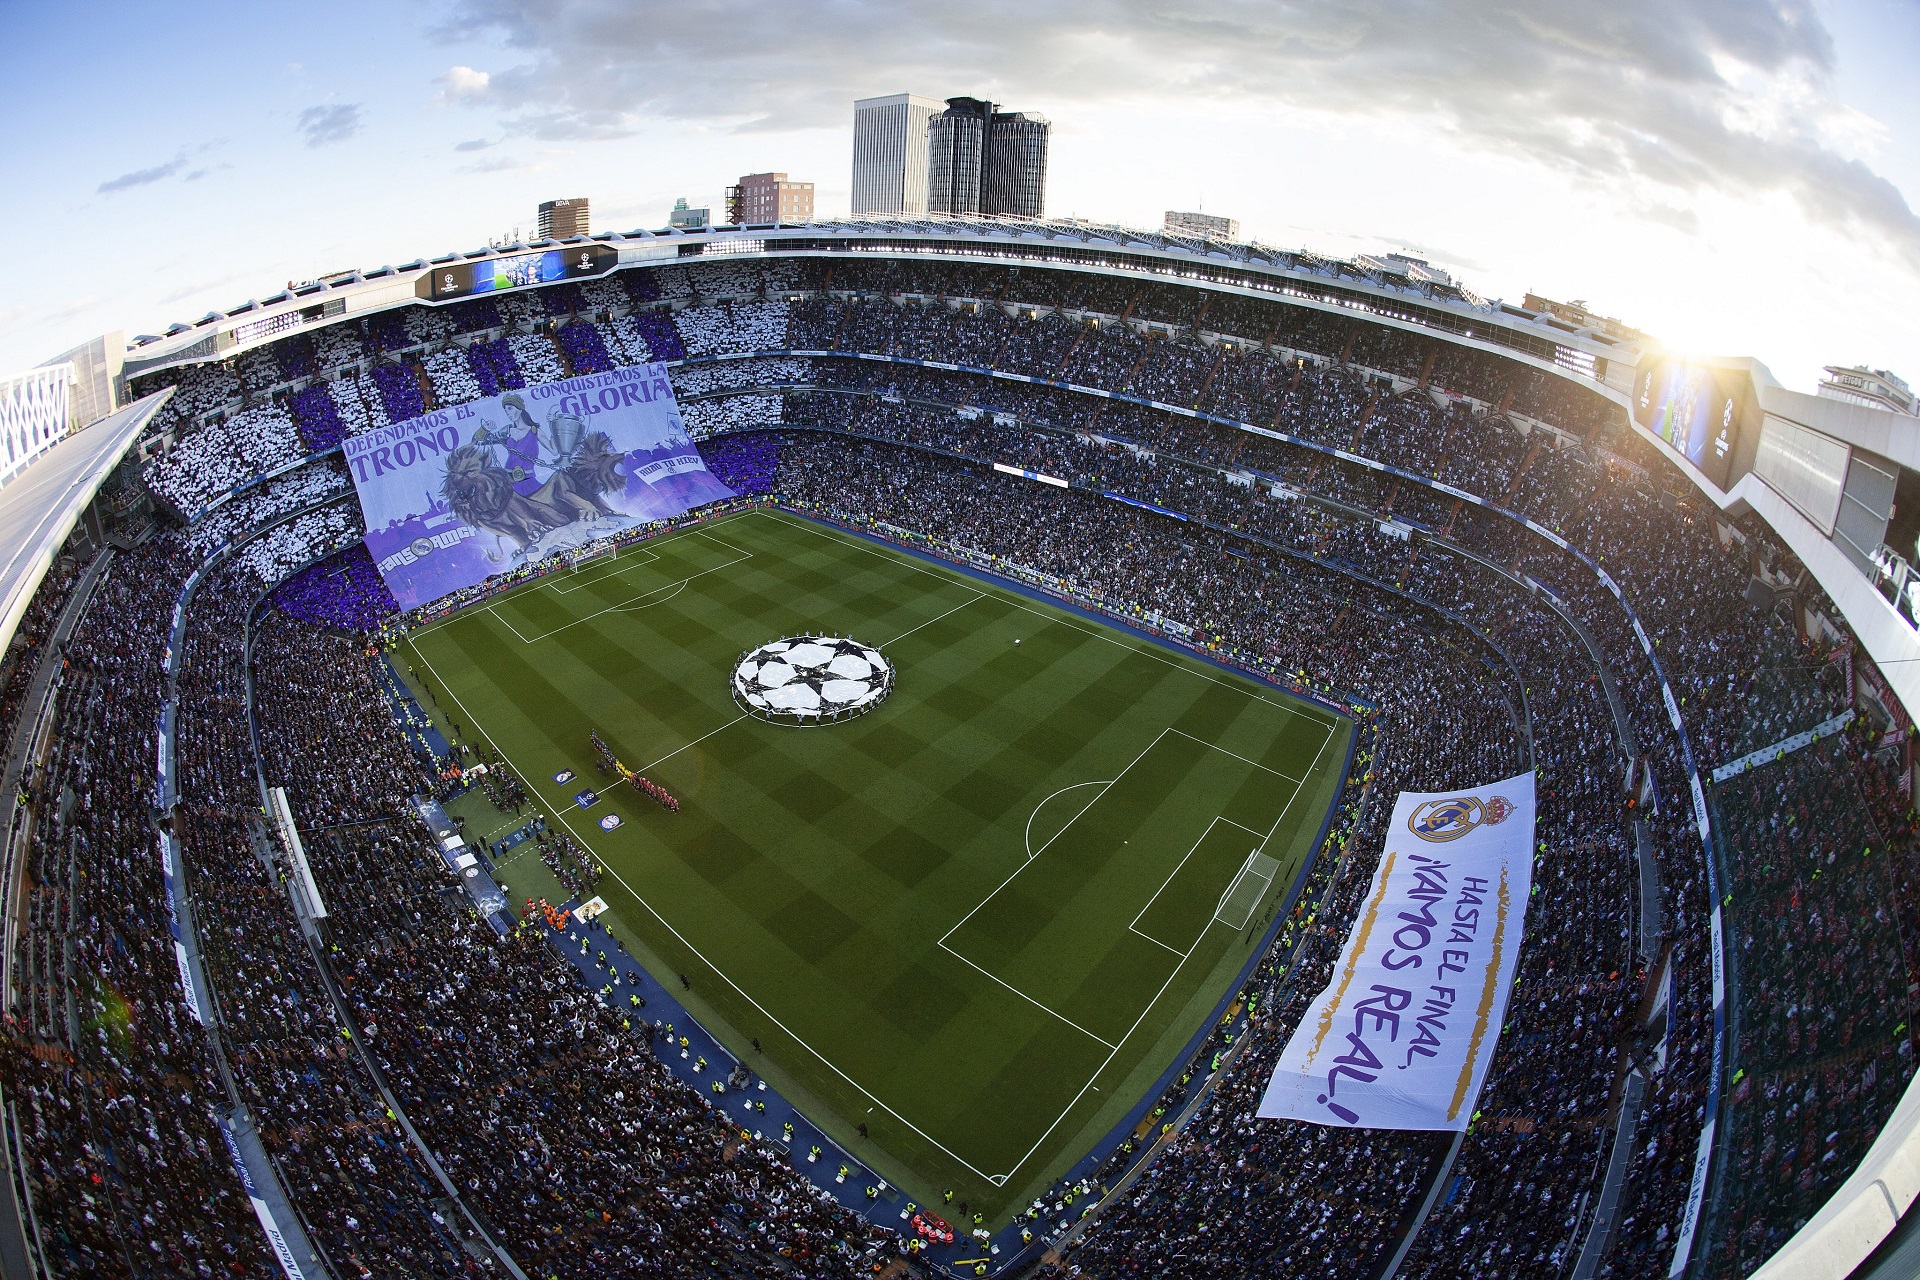 Wallpaper, Santiago Bernabeu Stadium, Real Madrid, Soccer Field, soccer clubs, Champions League, crowds, stadium 1920x1280